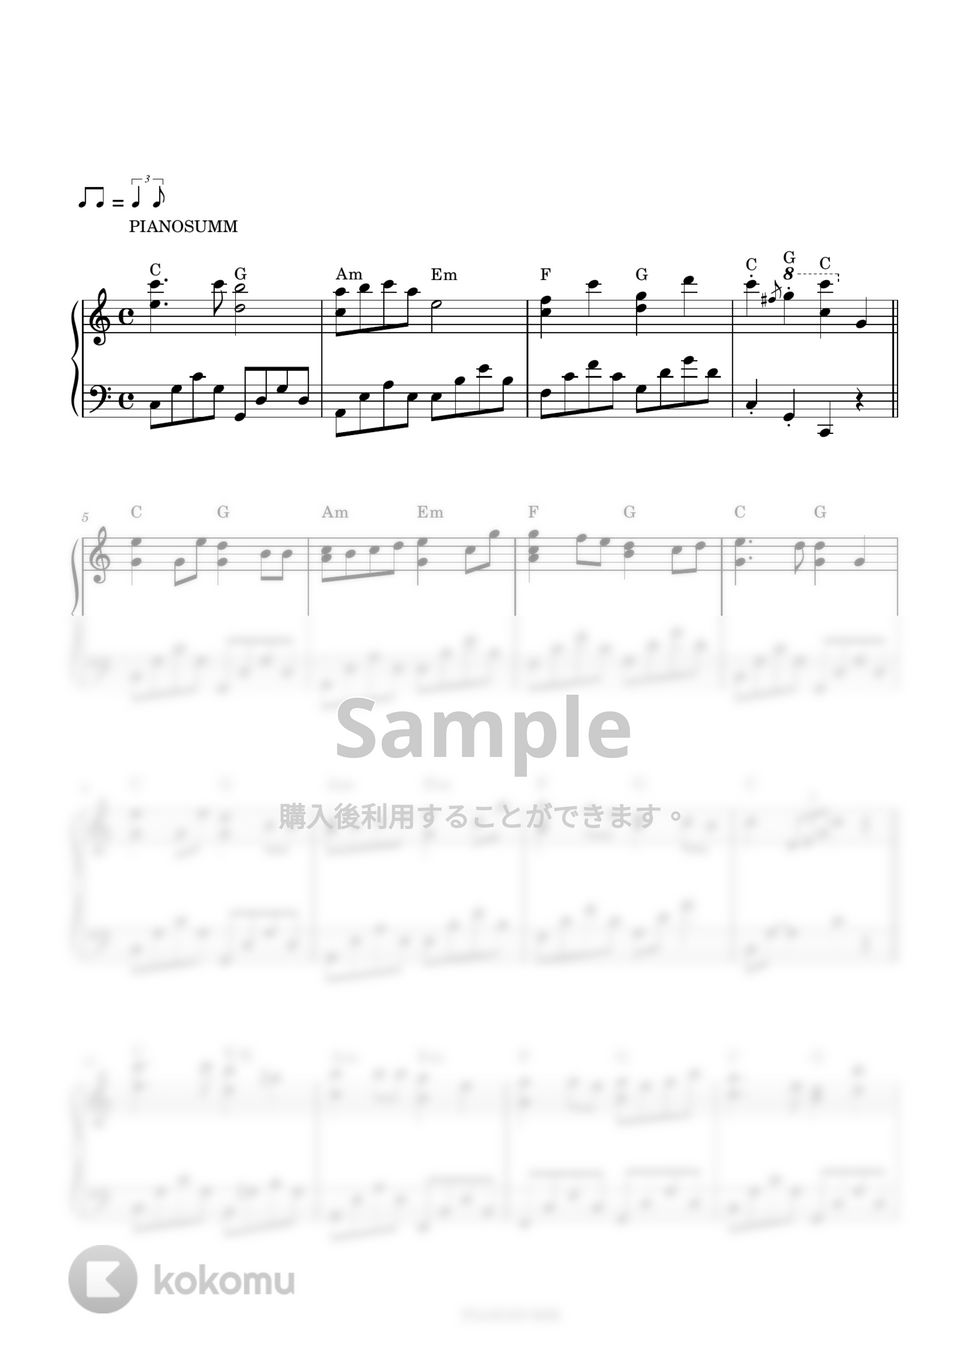 IU(아이유) - Pieces Album (조각집 전곡) (Includes Ckey) by PIANOSUMM